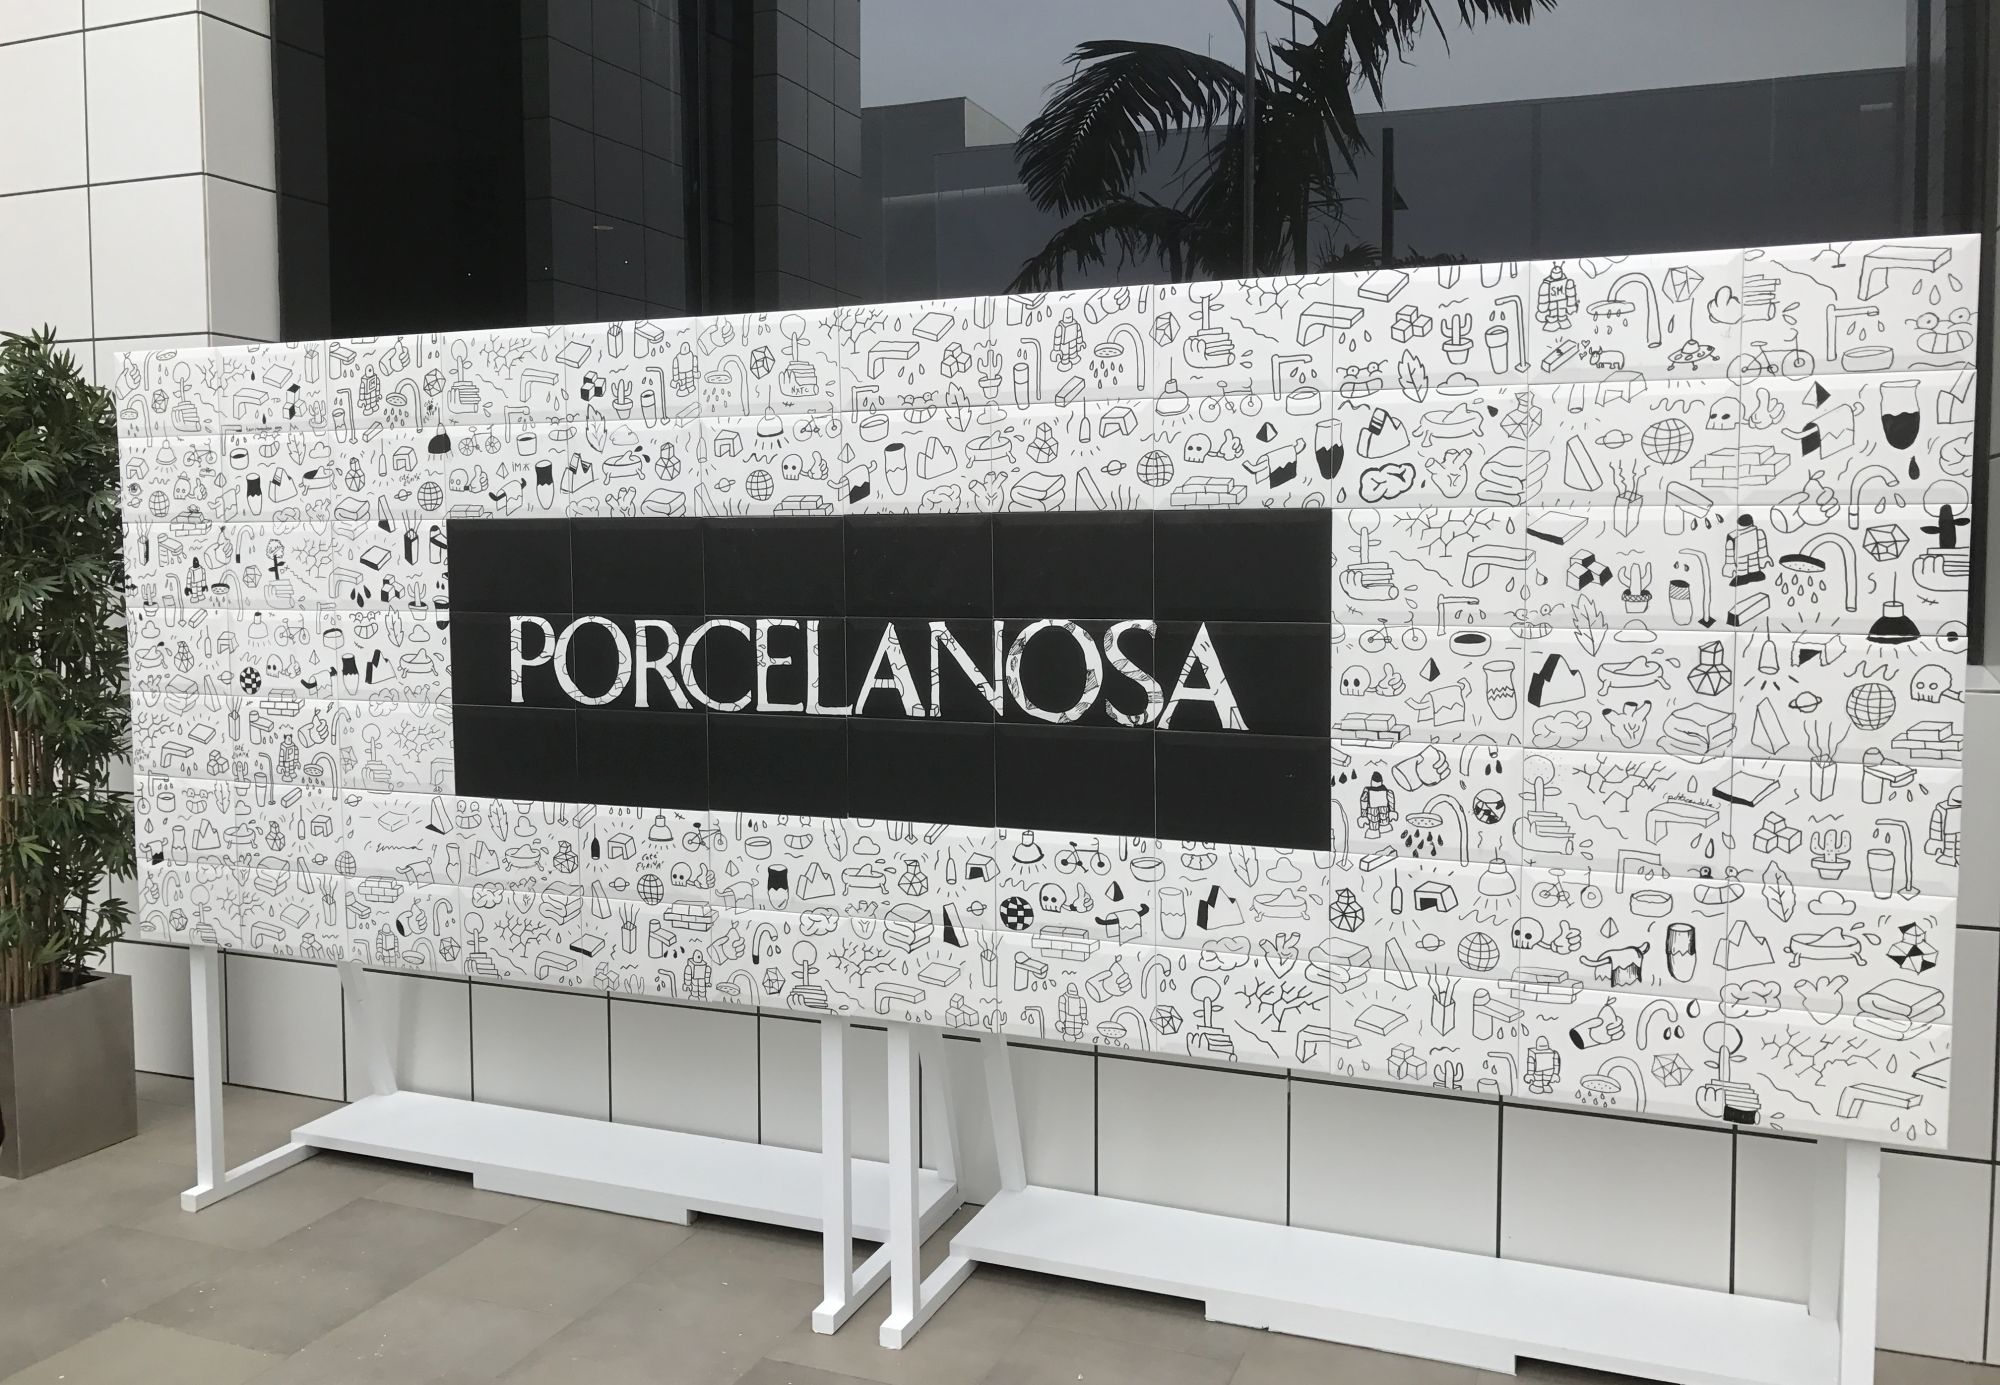 Porcelanosa “Design Festival” in Valencia, Opening Doors to an Inspiring 2017